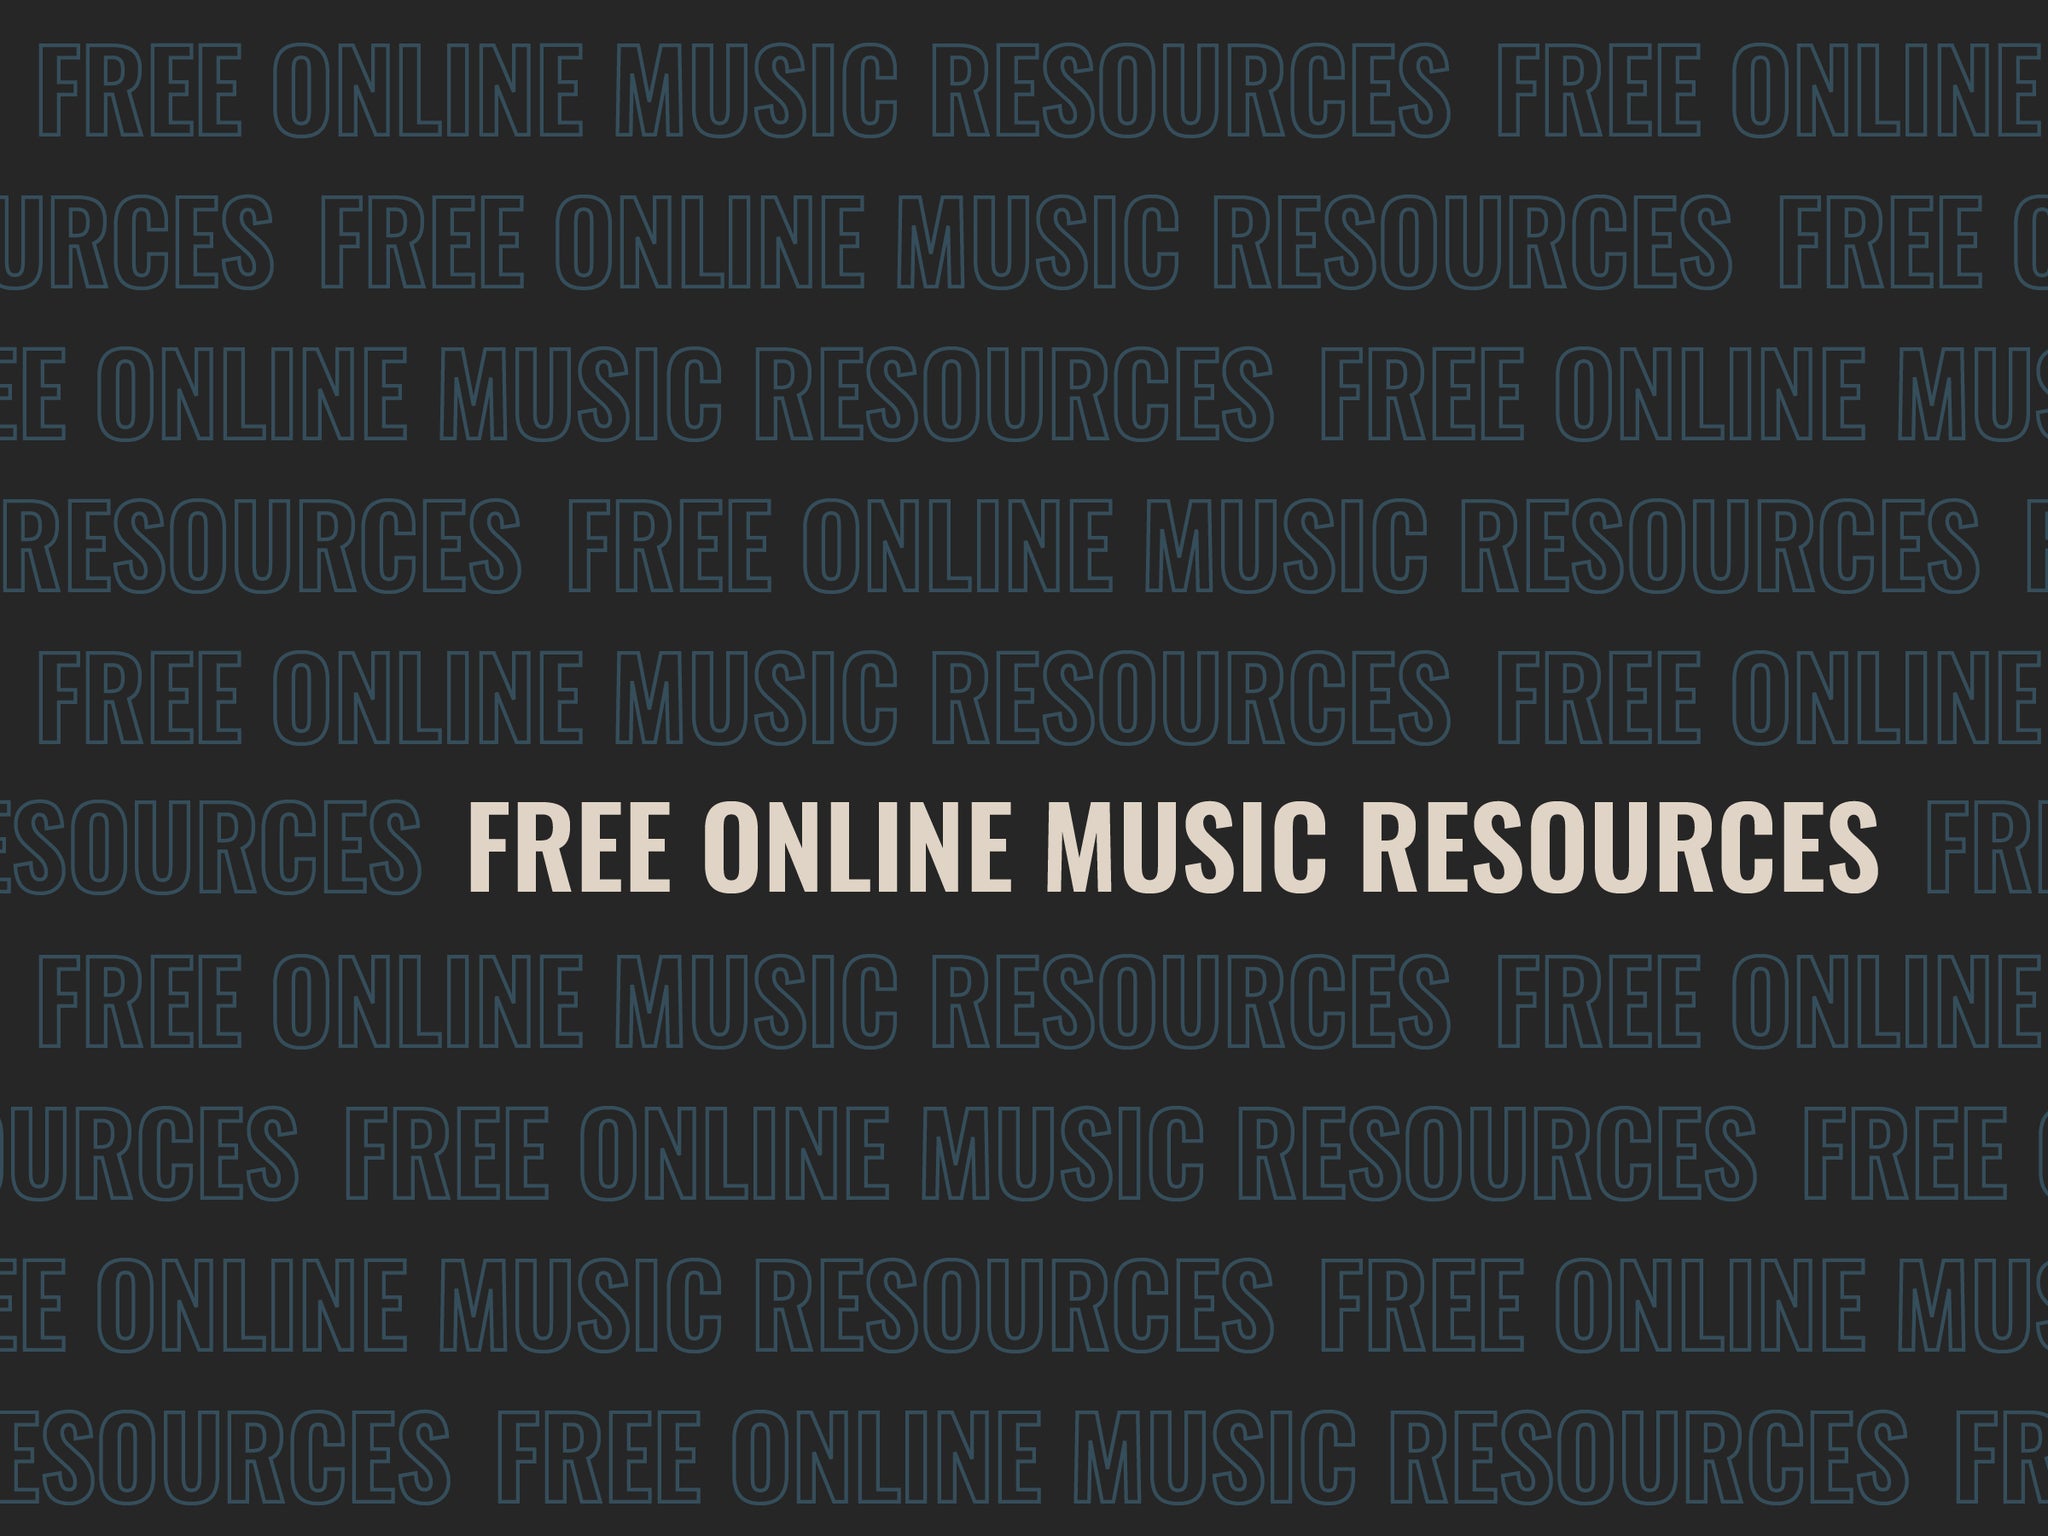 Free Online Music Resources